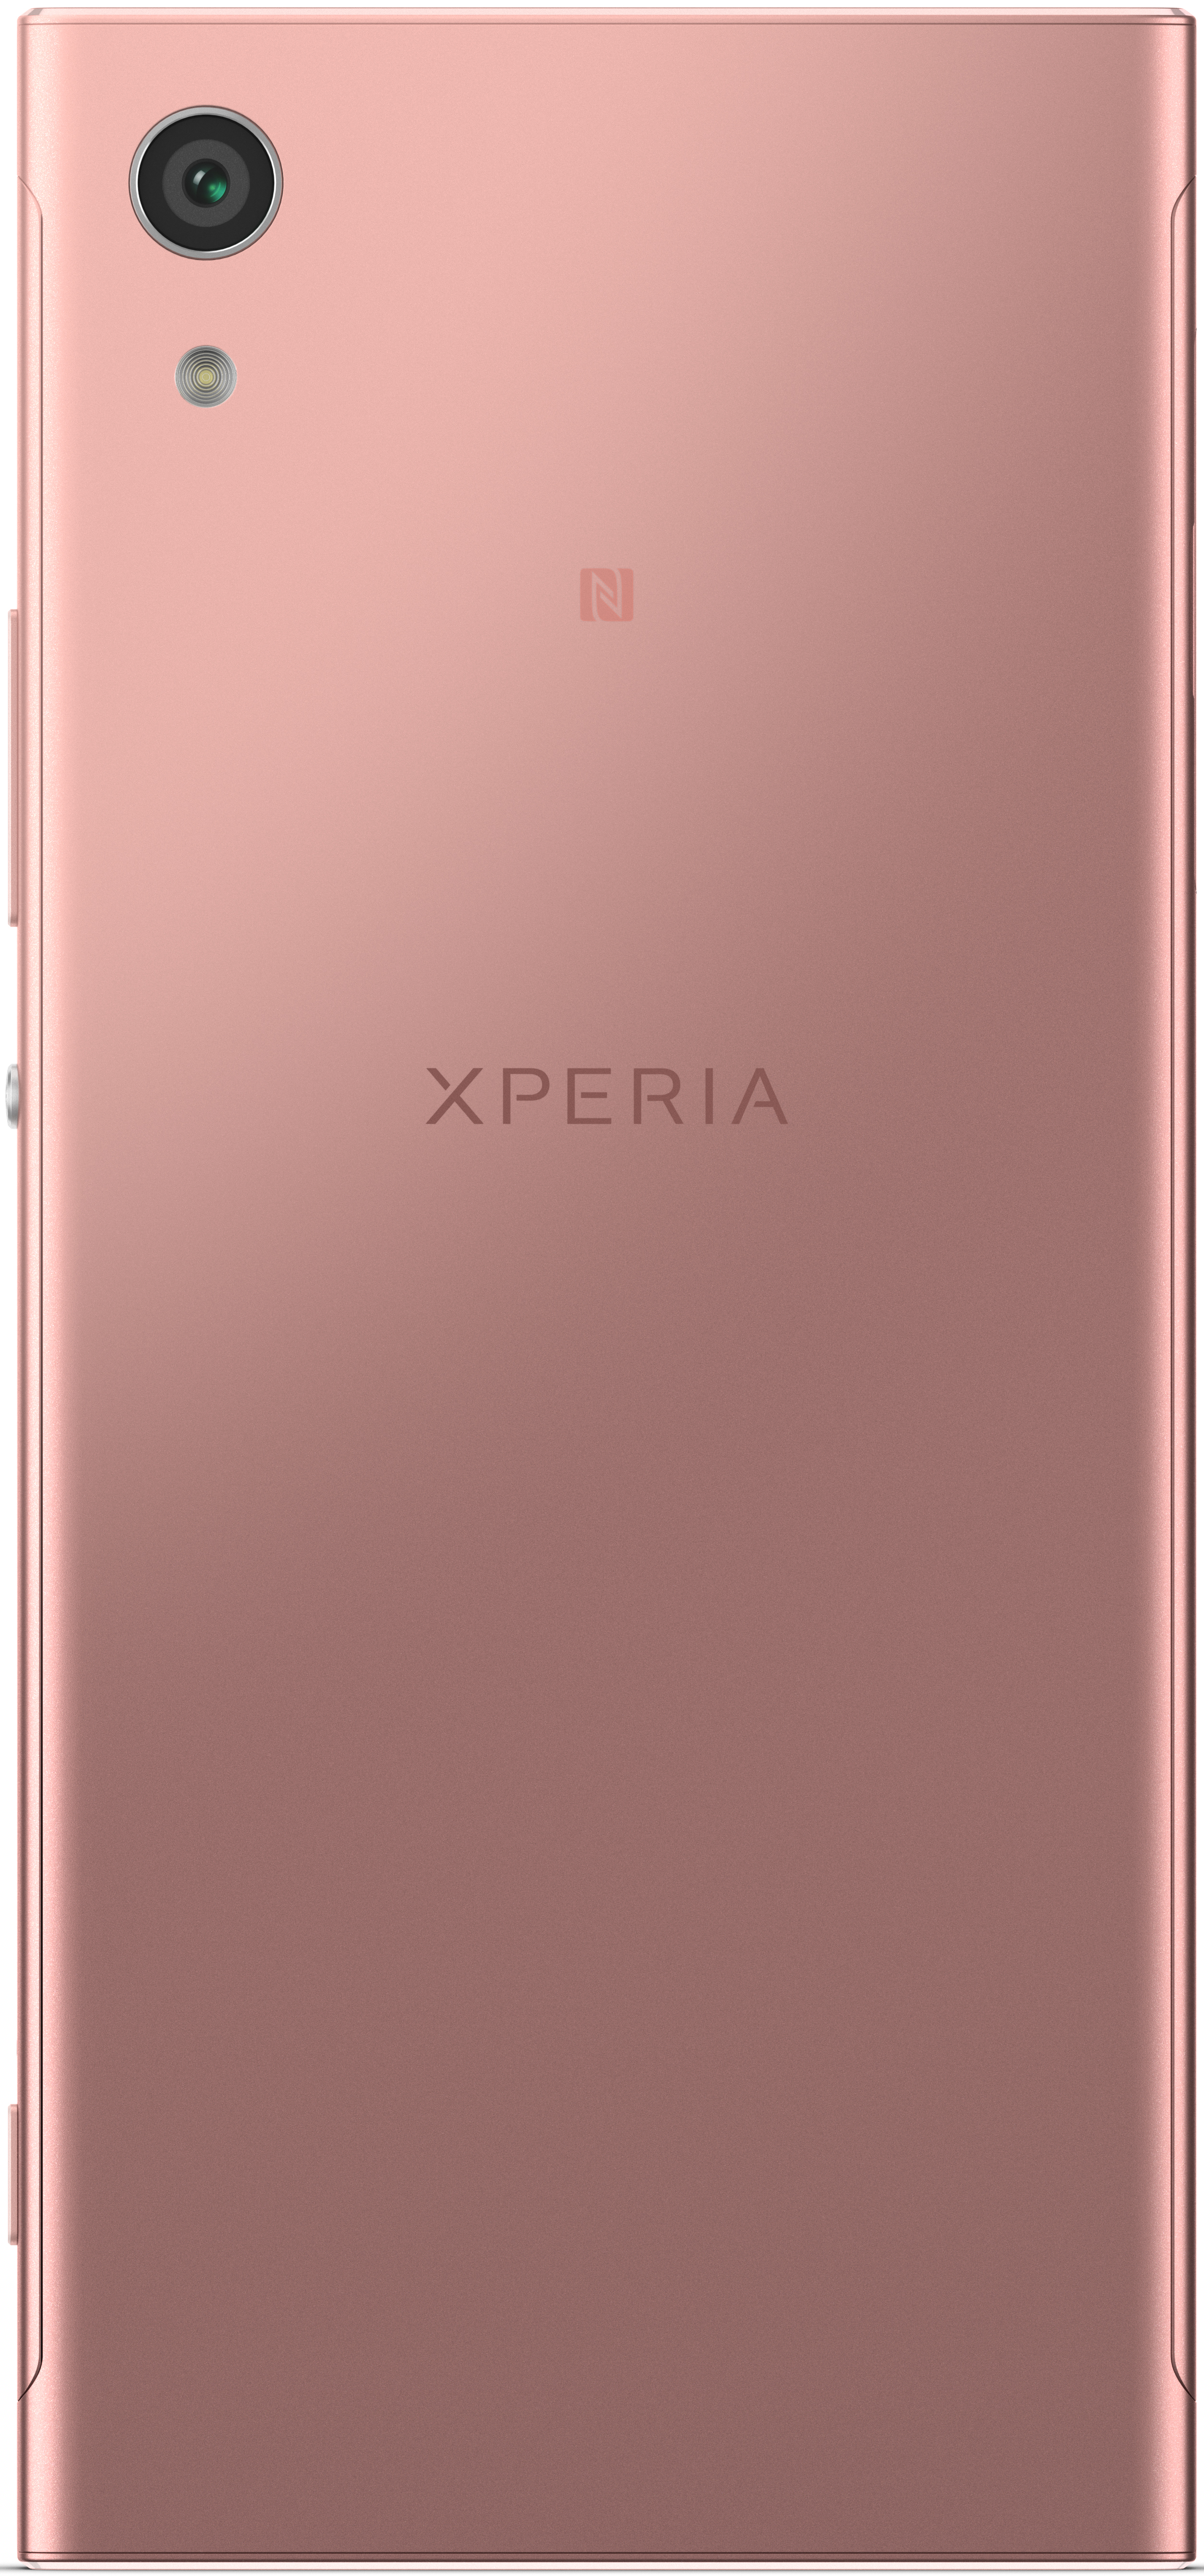 Sony Xperia XA1 G3123 32GB Unlocked GSM LTE Octa-Core Phone w/ 23MP Camera - Pink - image 2 of 4